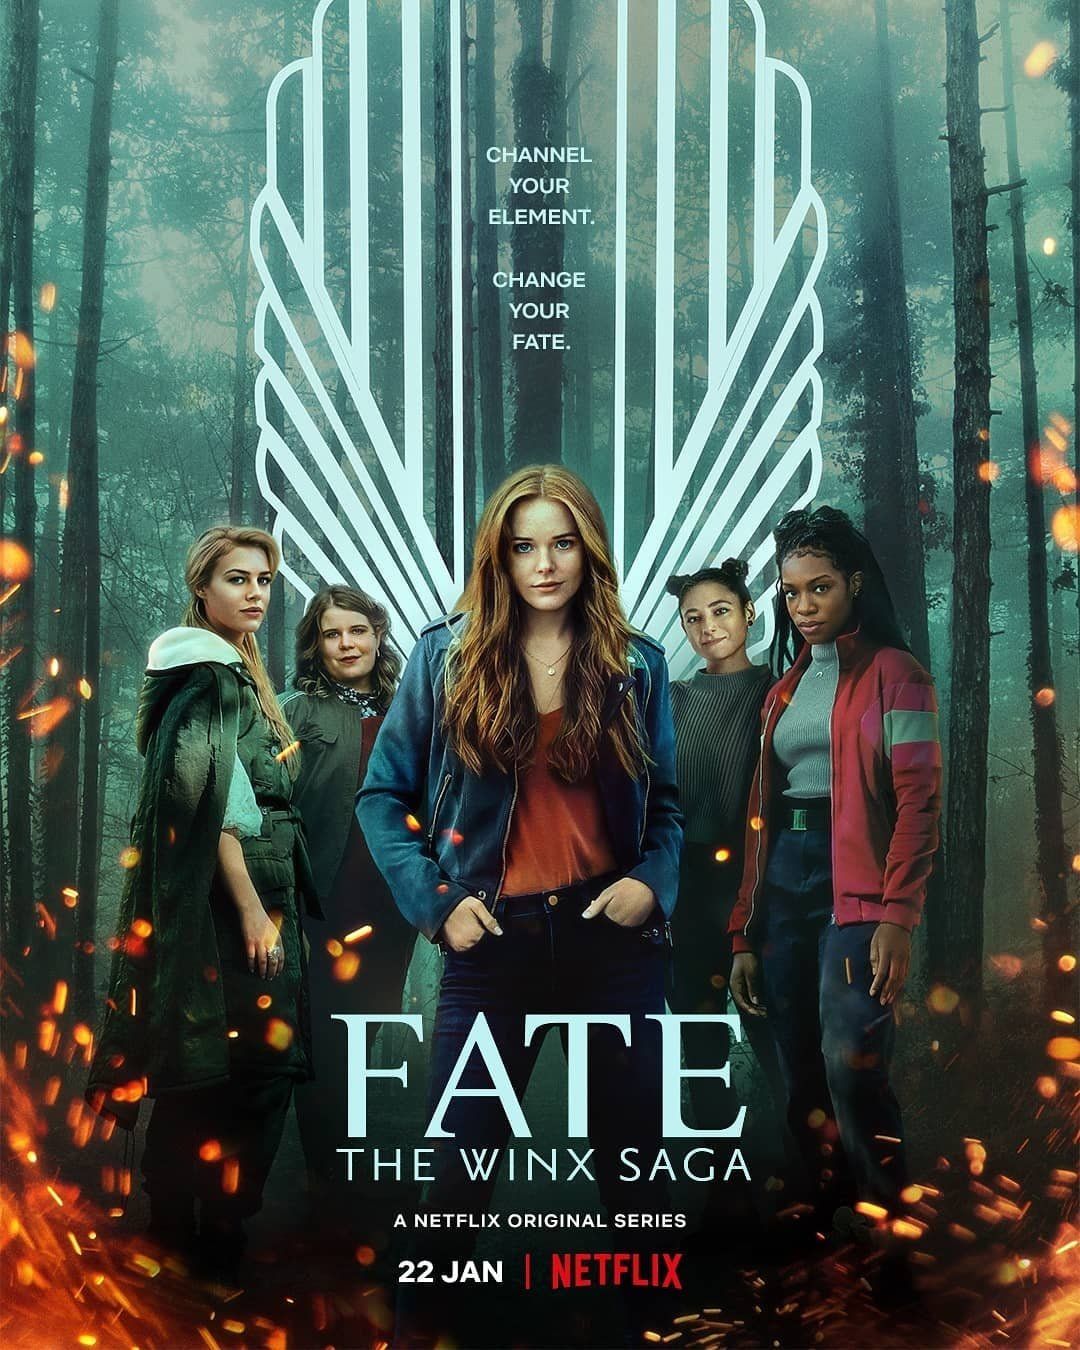 Fate The Winx Saga Netflix Poster